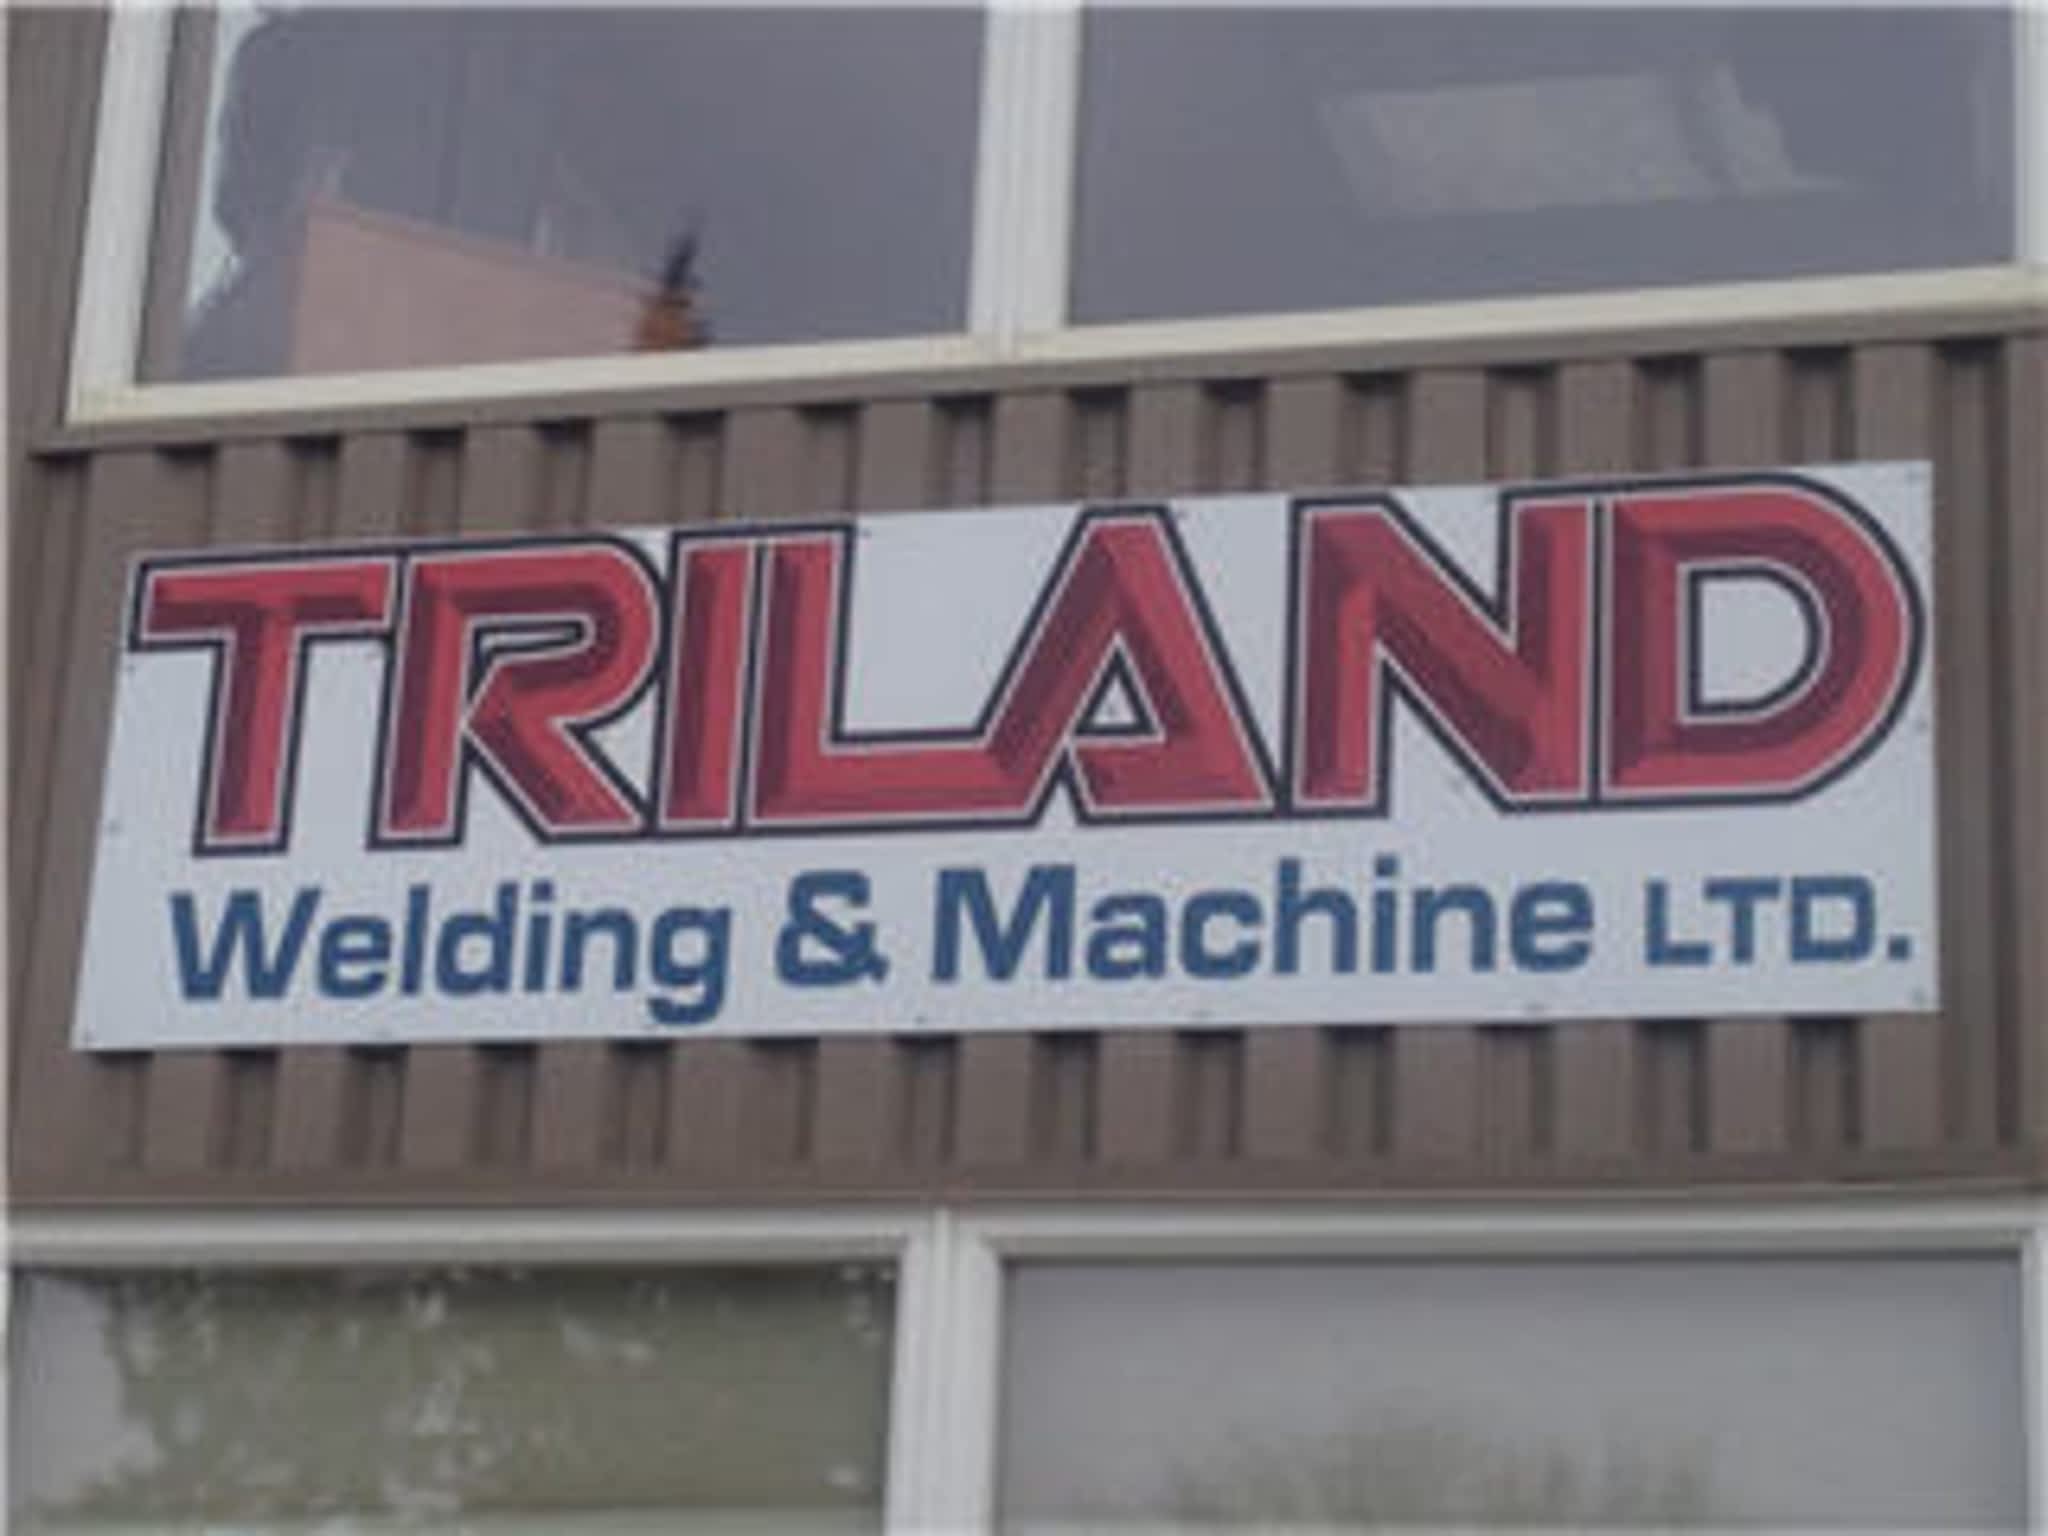 photo Triland Welding & Machine Ltd